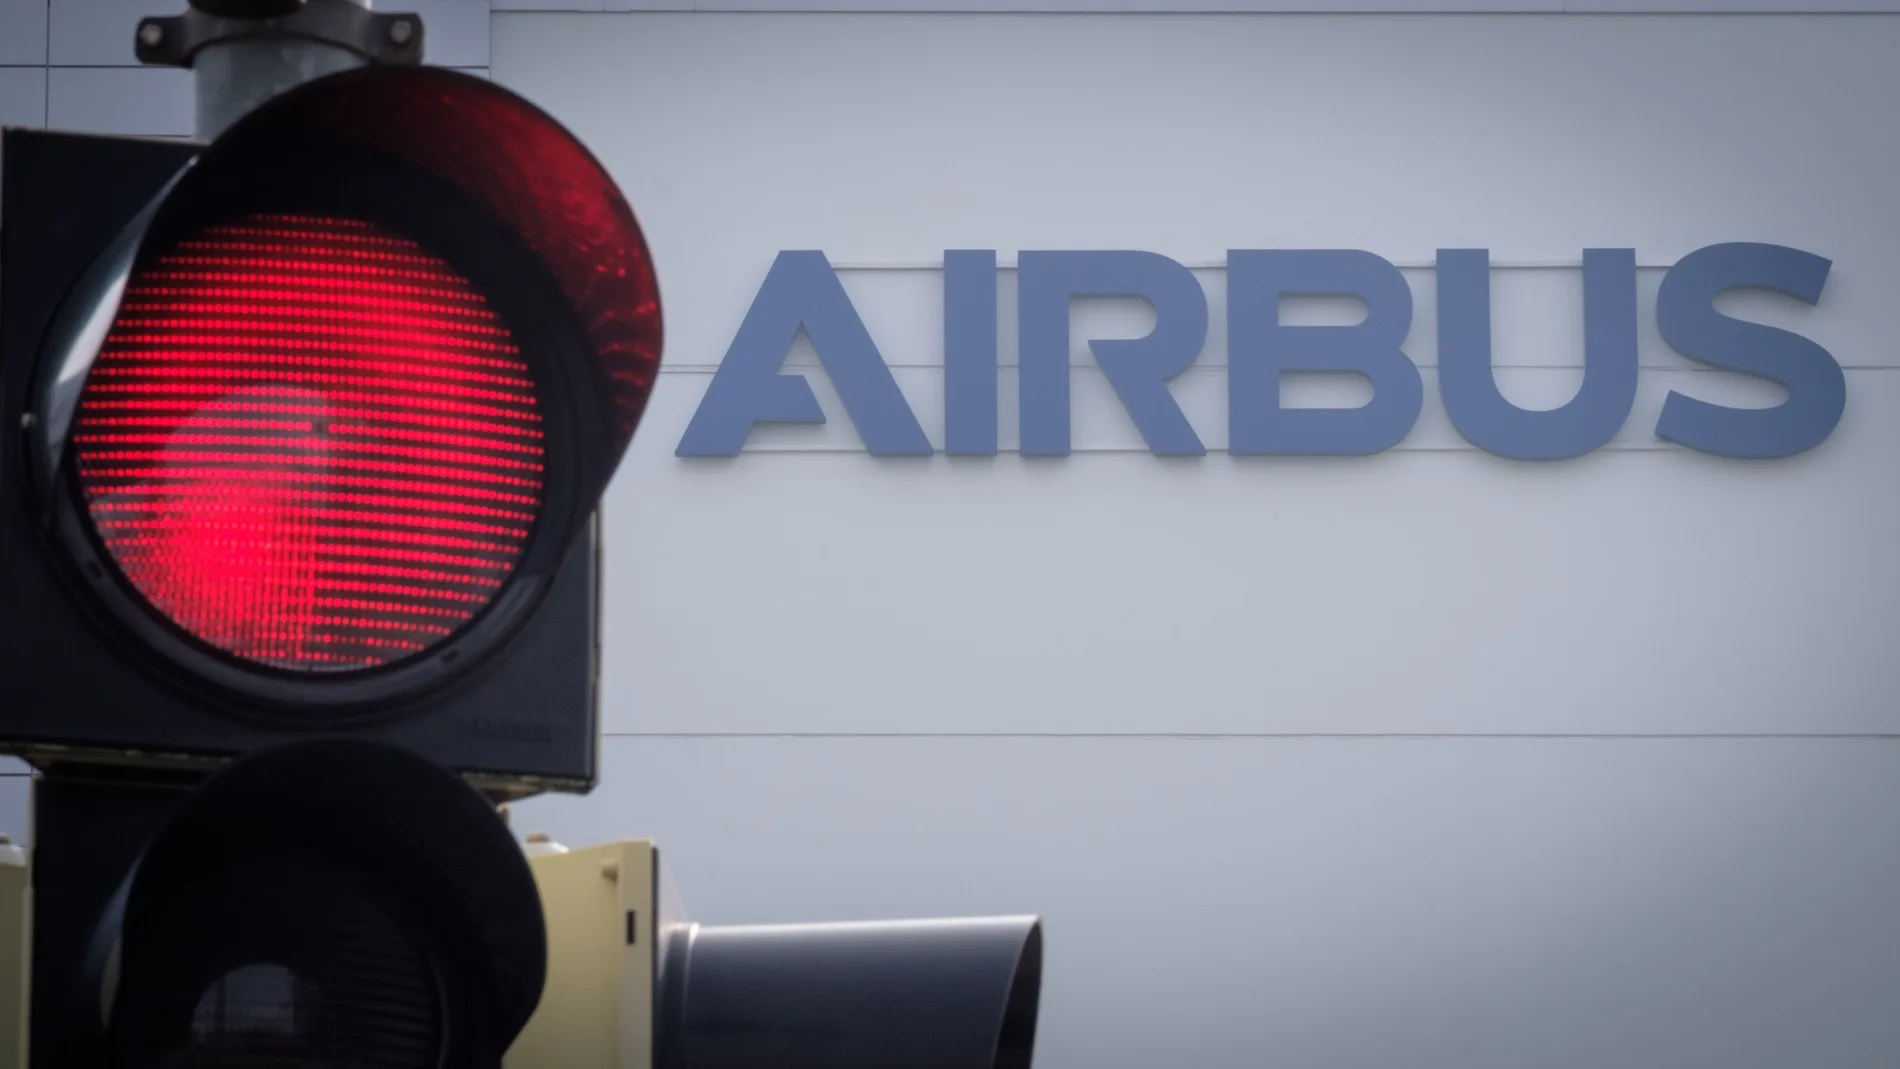 Airbus posts multi-million loss in Q1 amid coronavirus pandemic crisis